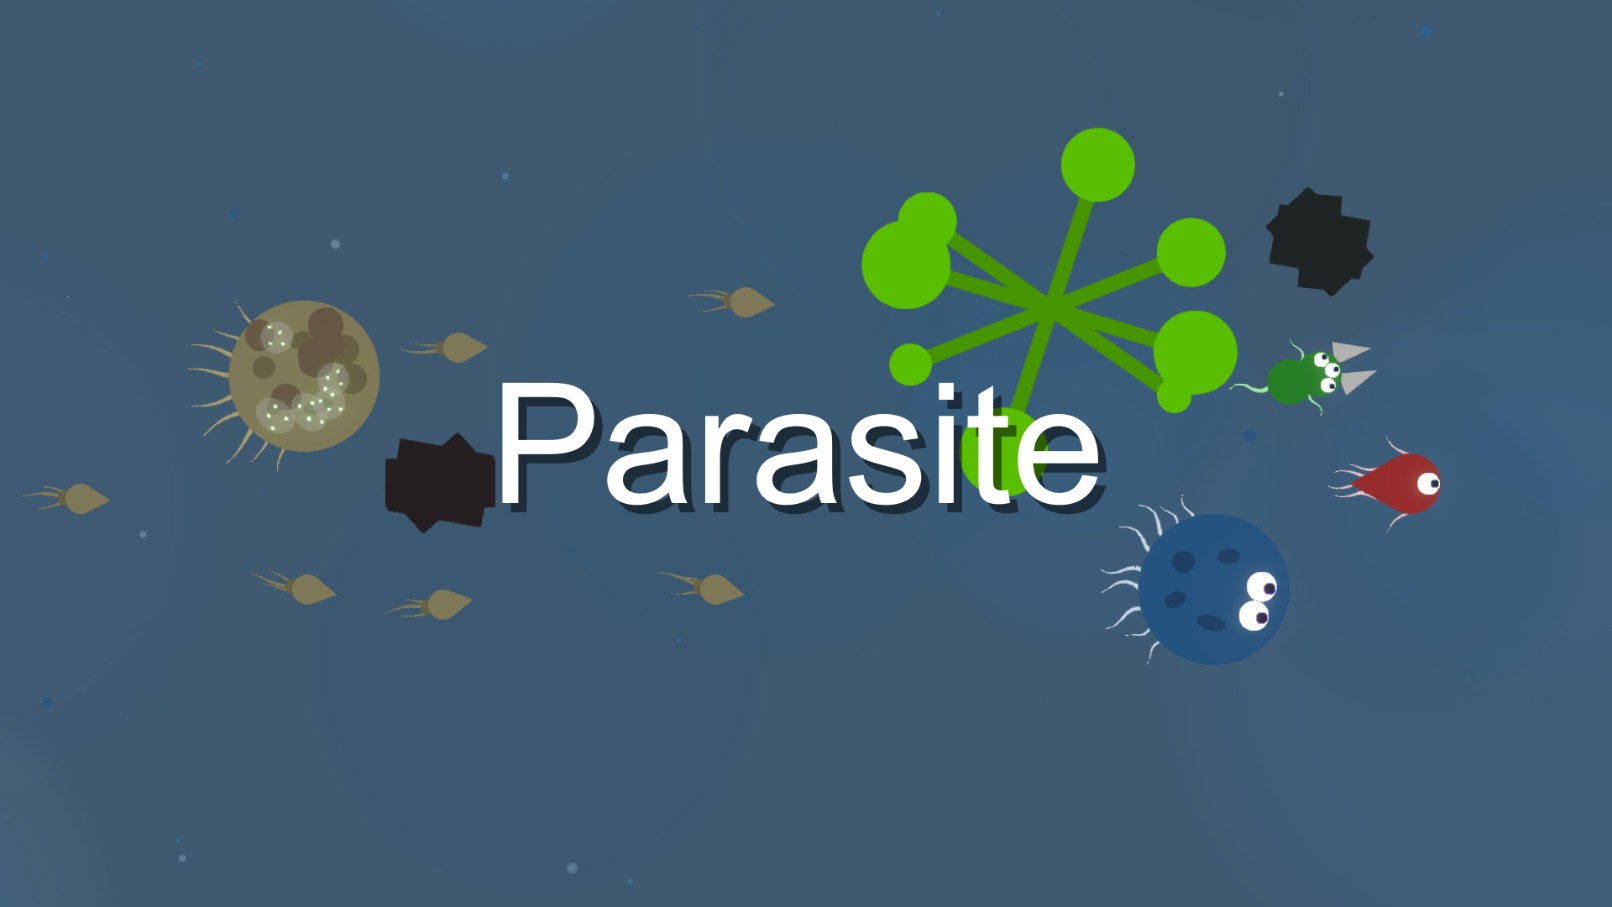 nsfw games involving parasites